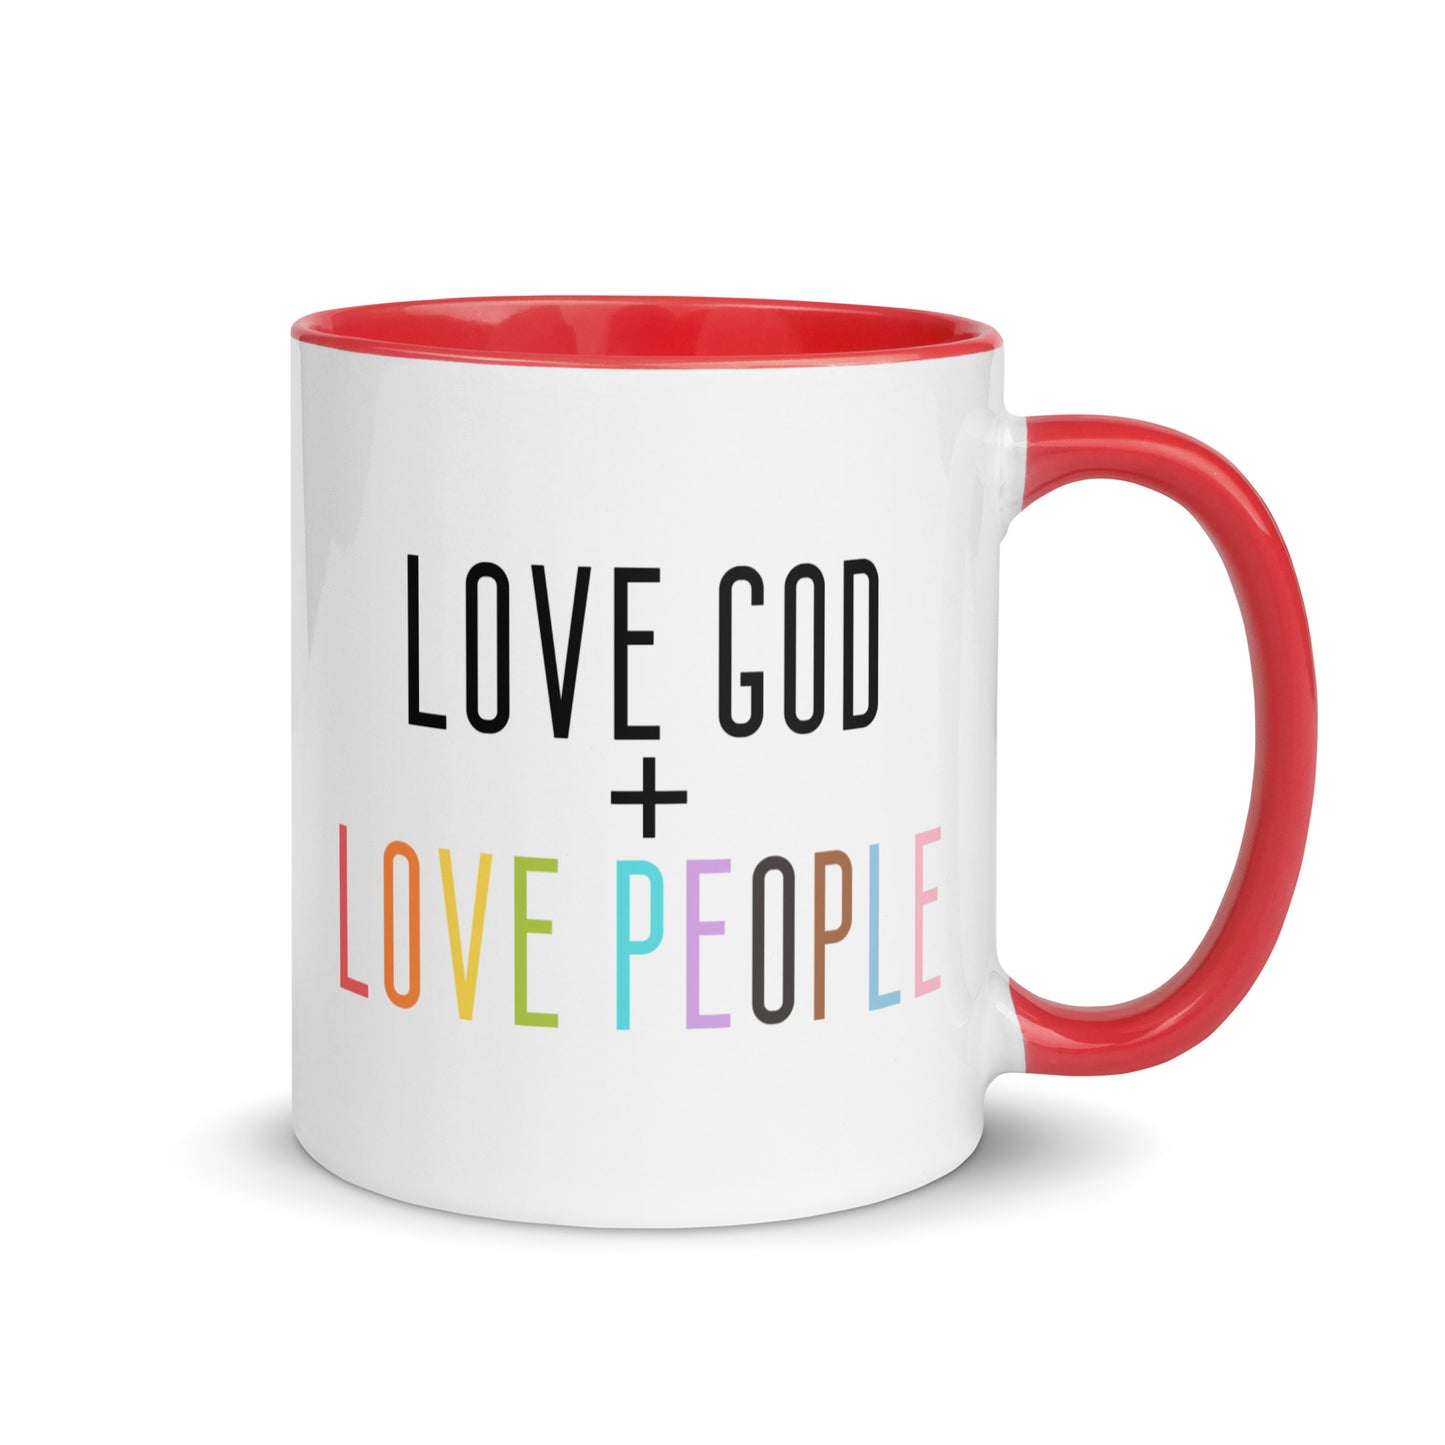 Love God + Love People Mug